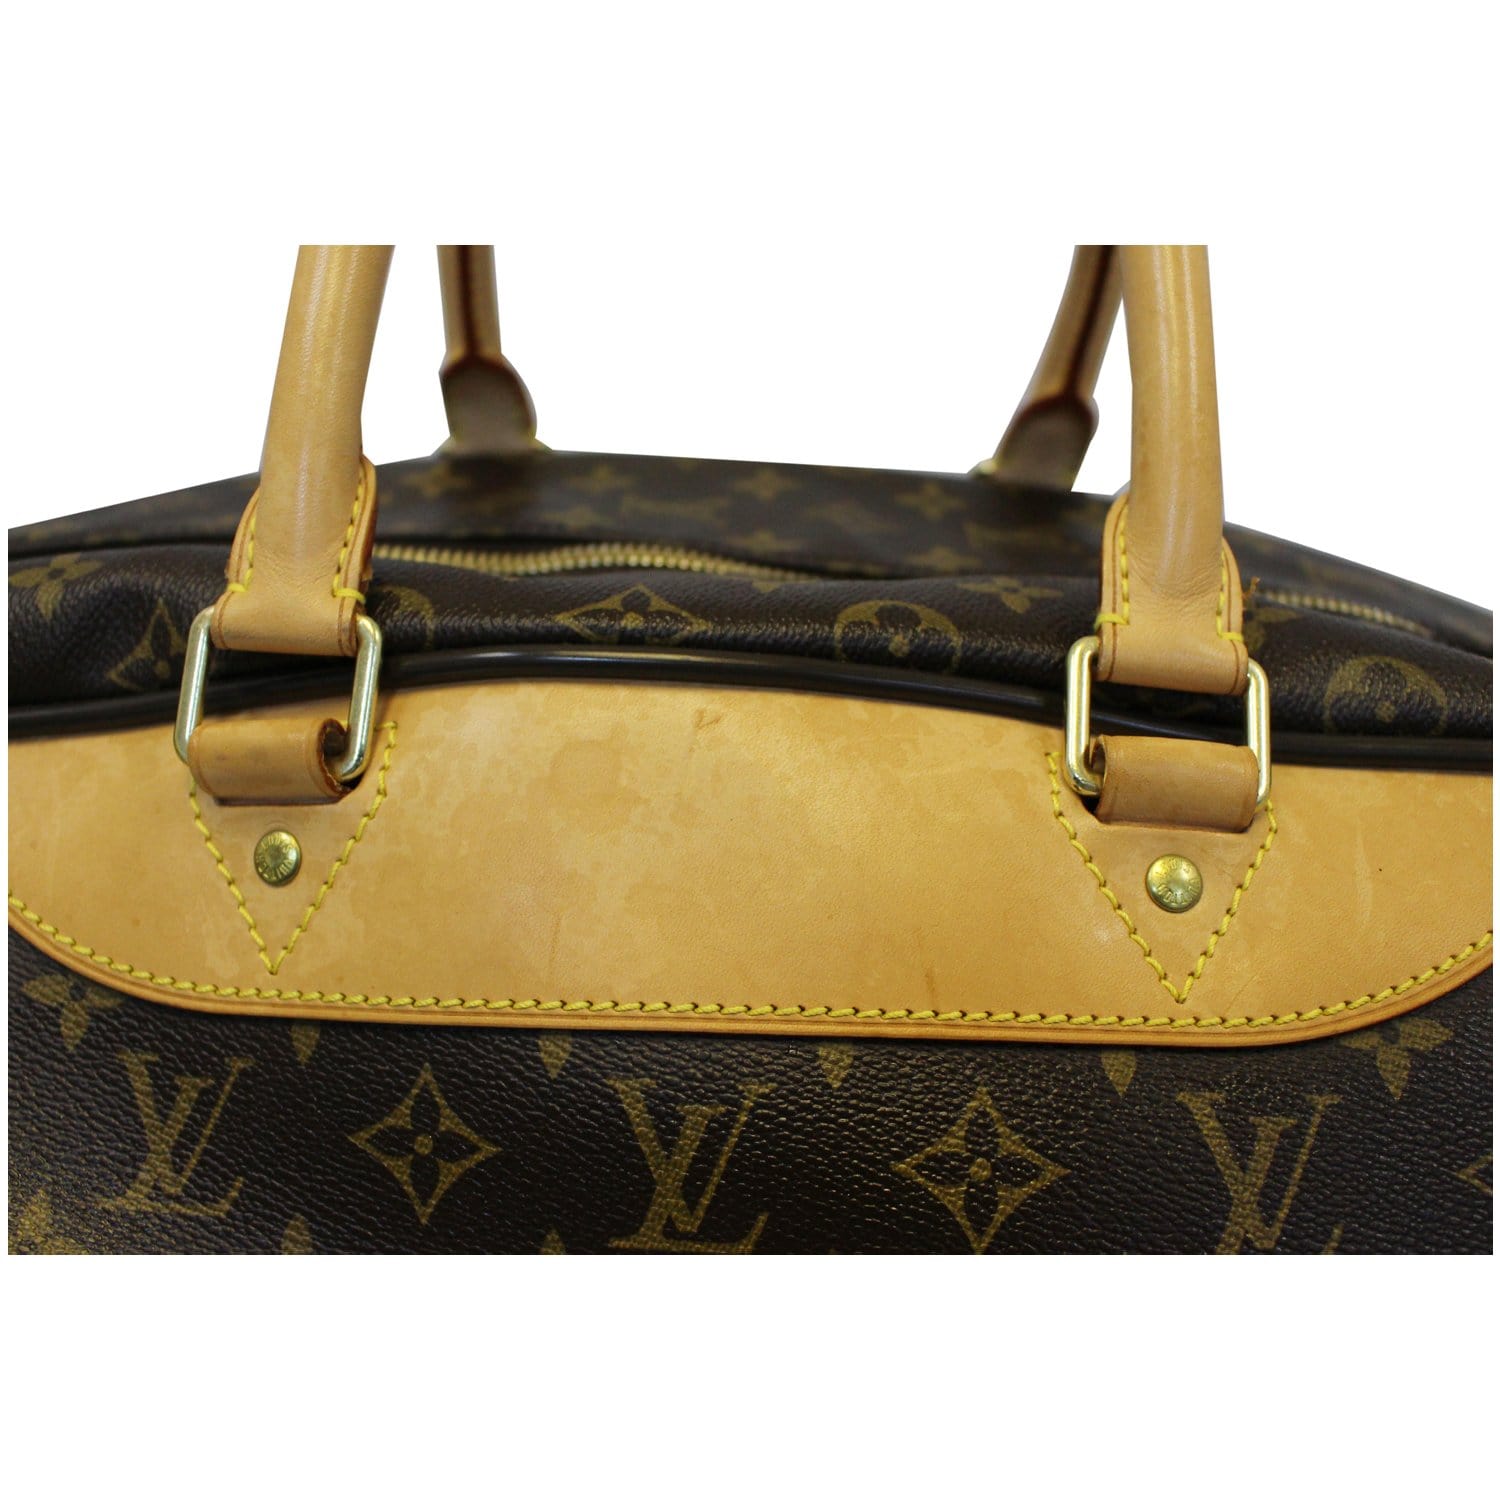 LOUIS VUITTON Handbag N23203 Eole 60 Damier canvas Brown unisex